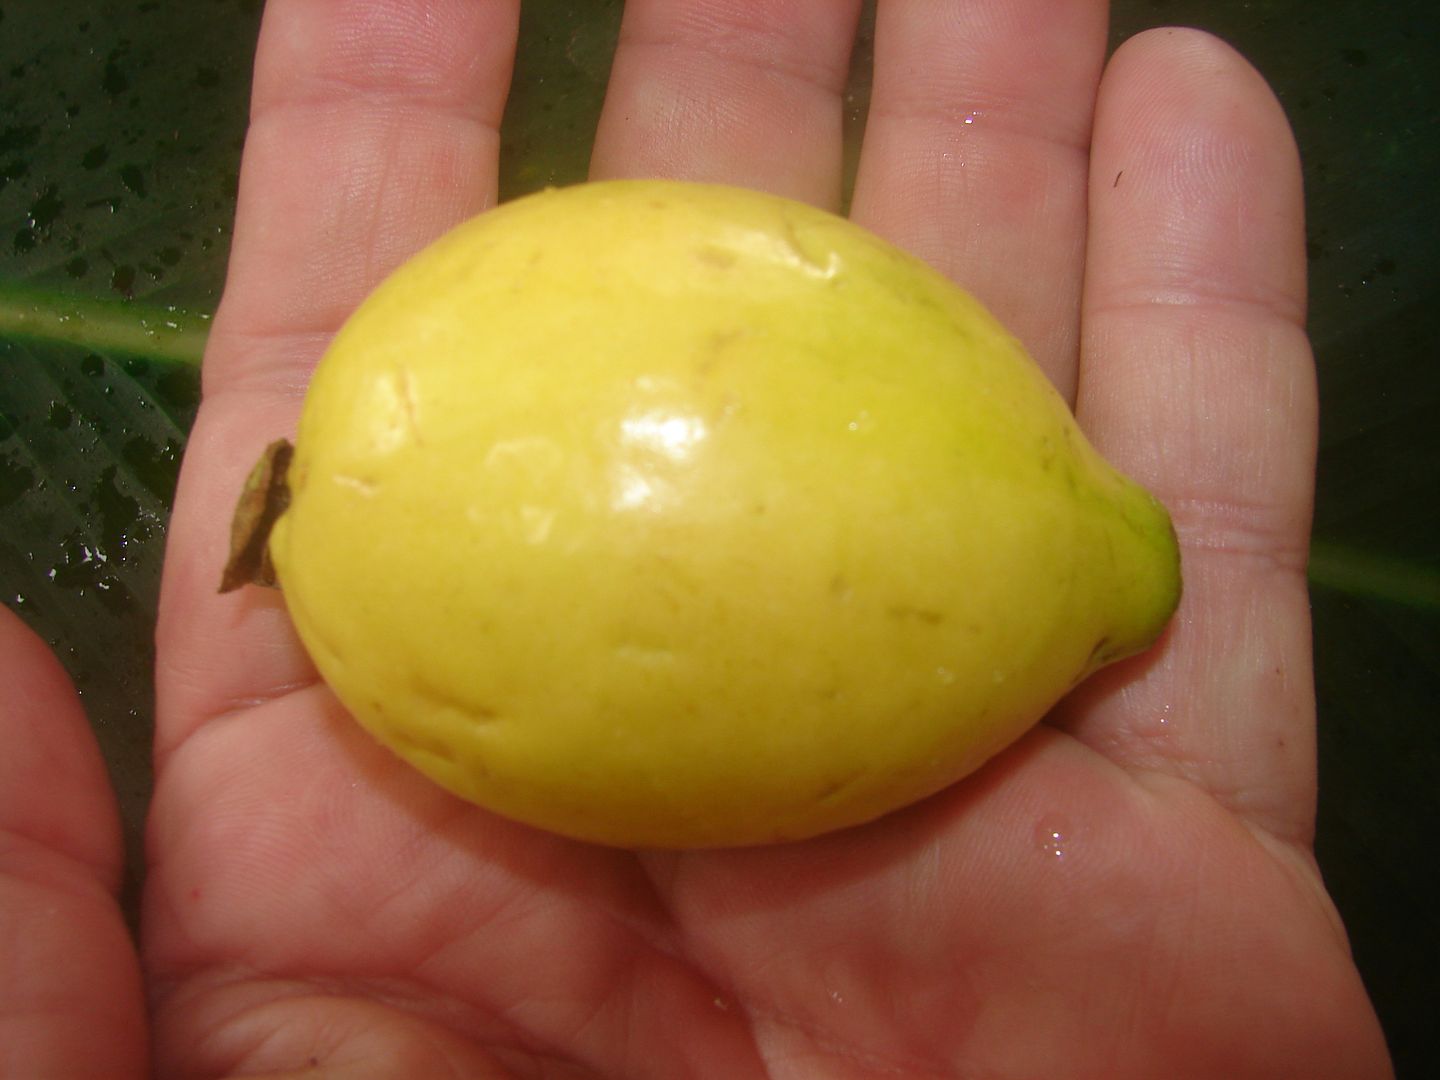 Guavasteen
Acca sellowiana